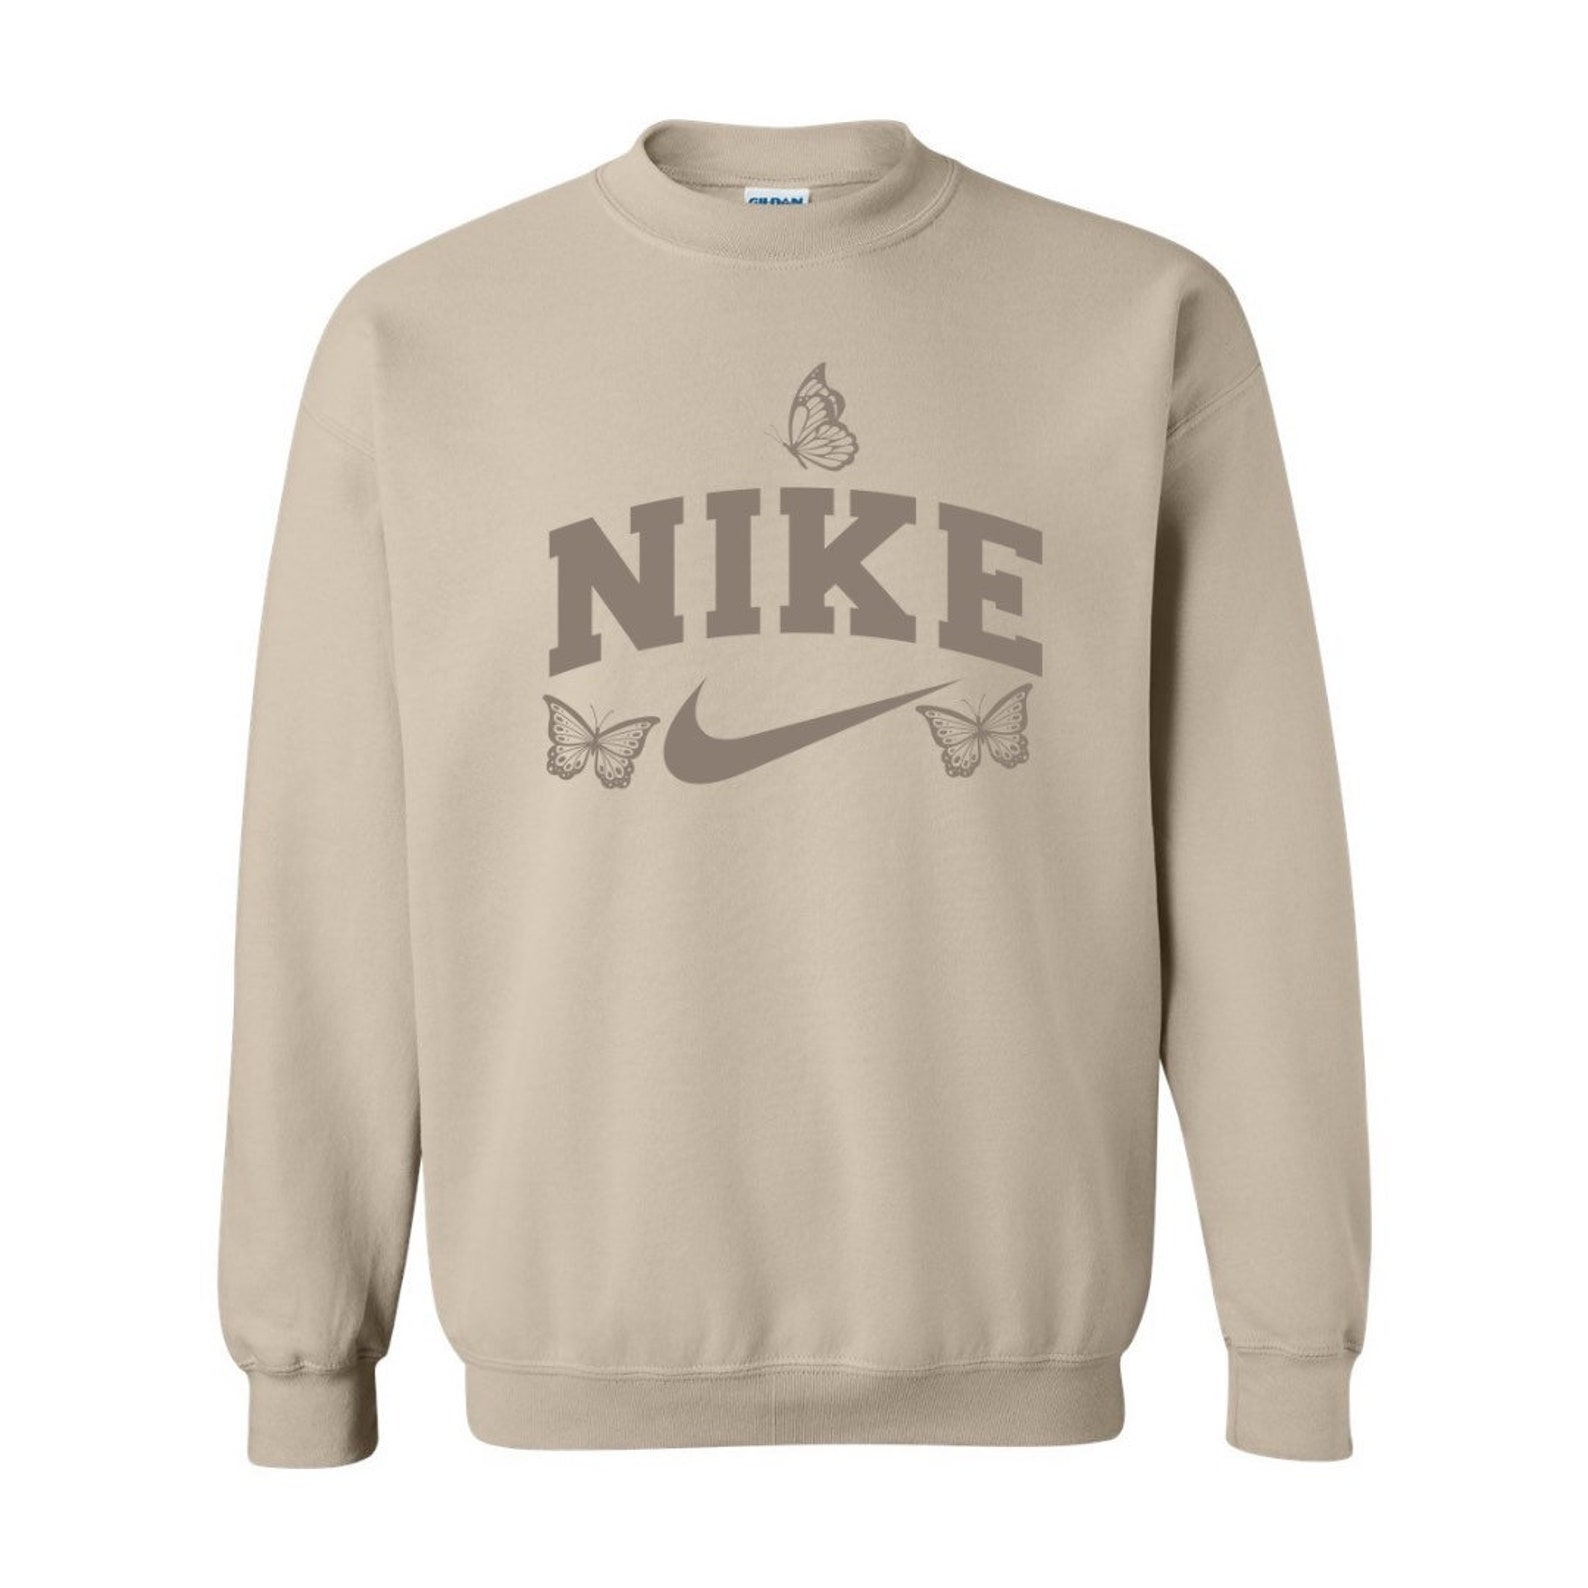 Nike butterfly crewneck trending oversized vintage sweater | Etsy